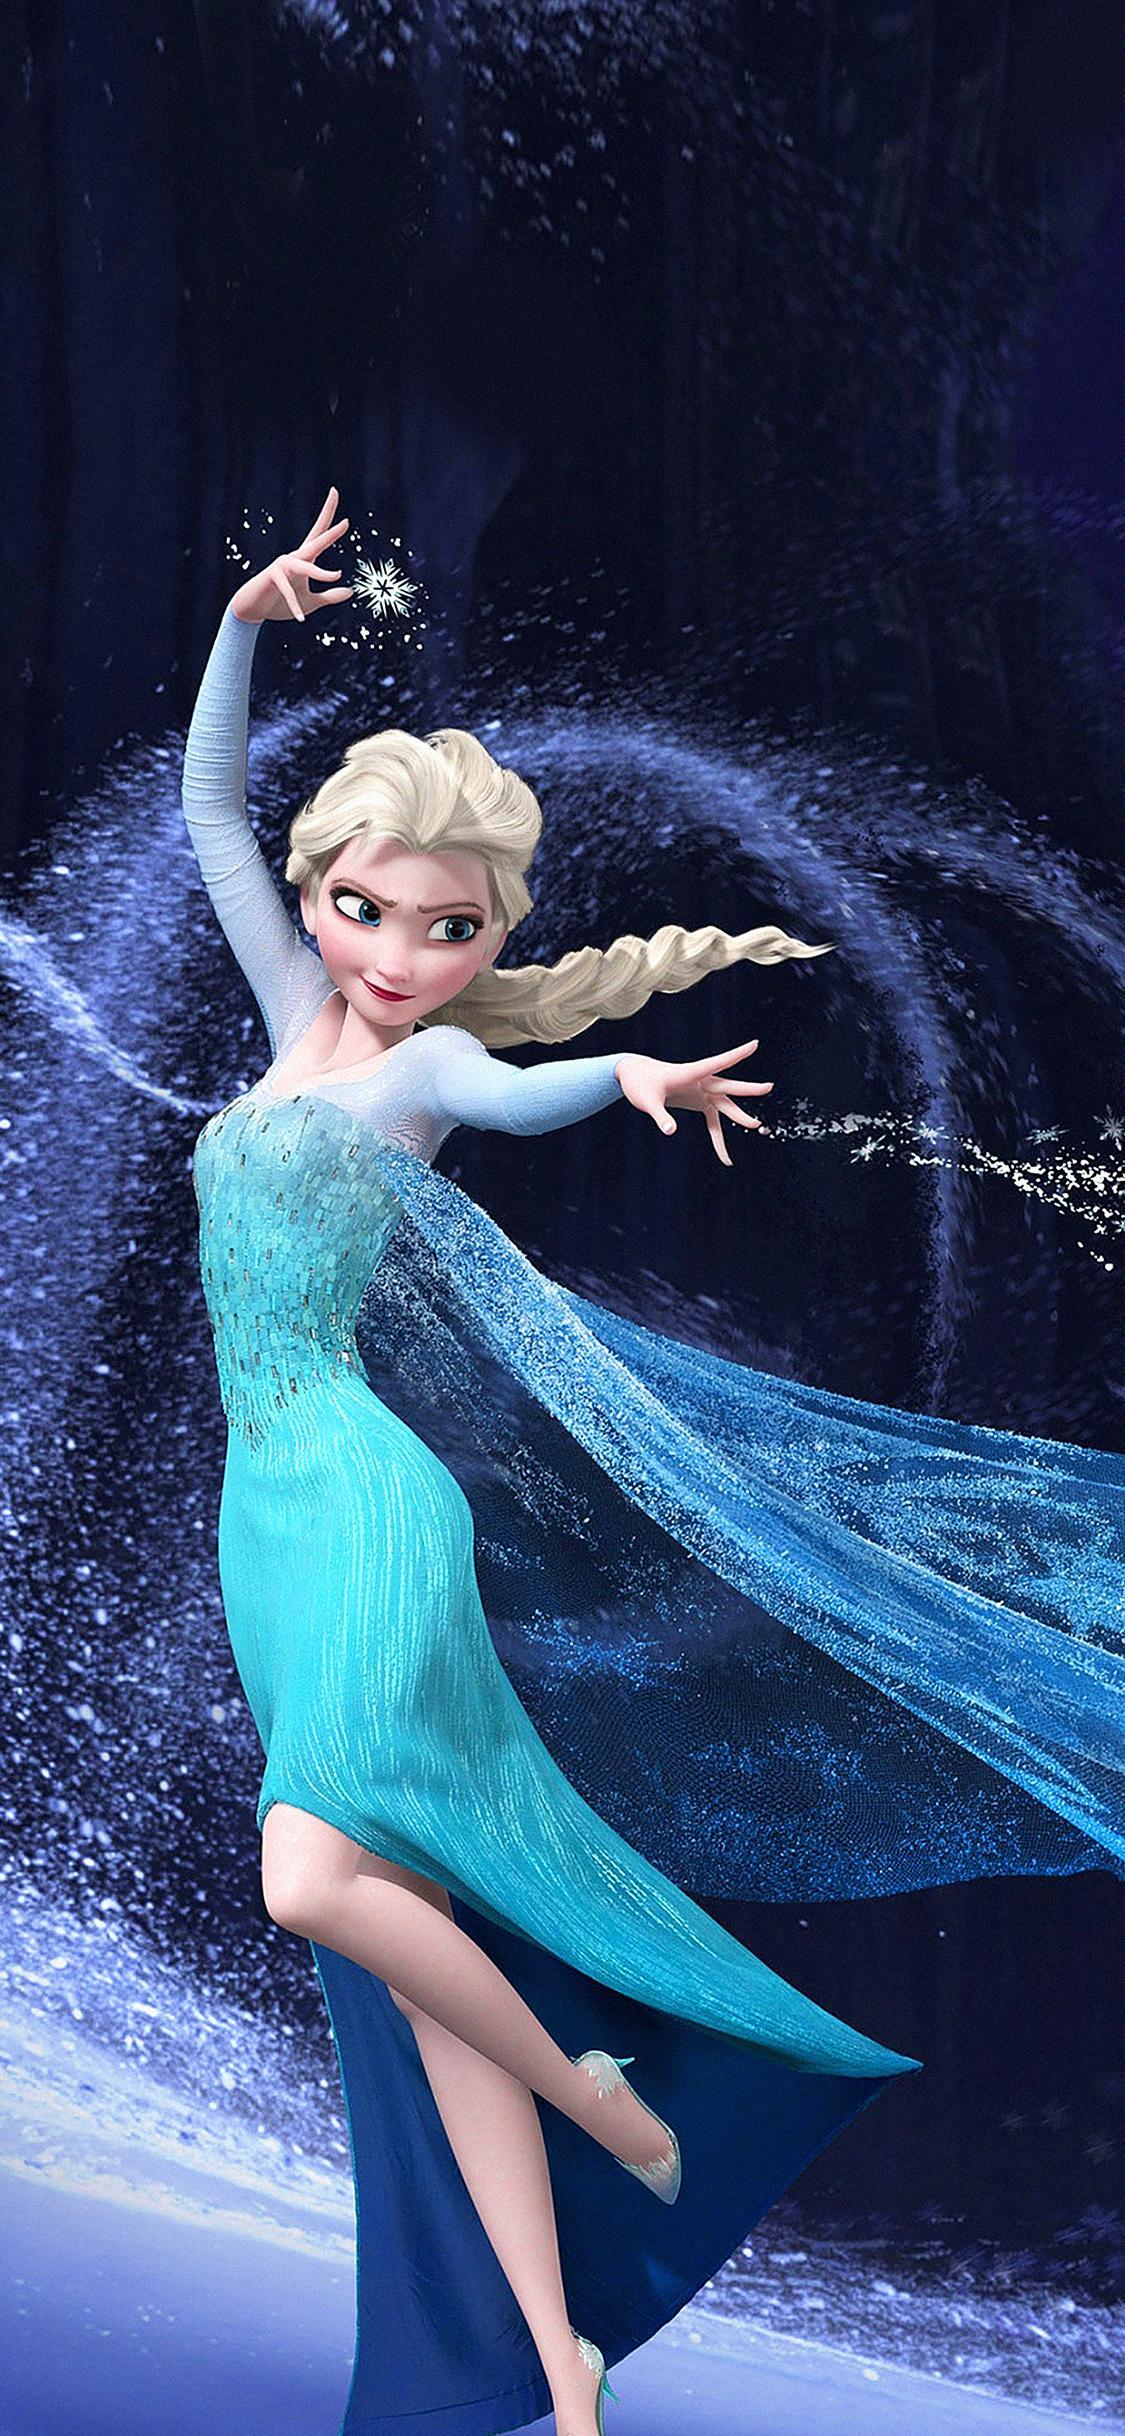 Wallpaper Frozen Elsa Disney